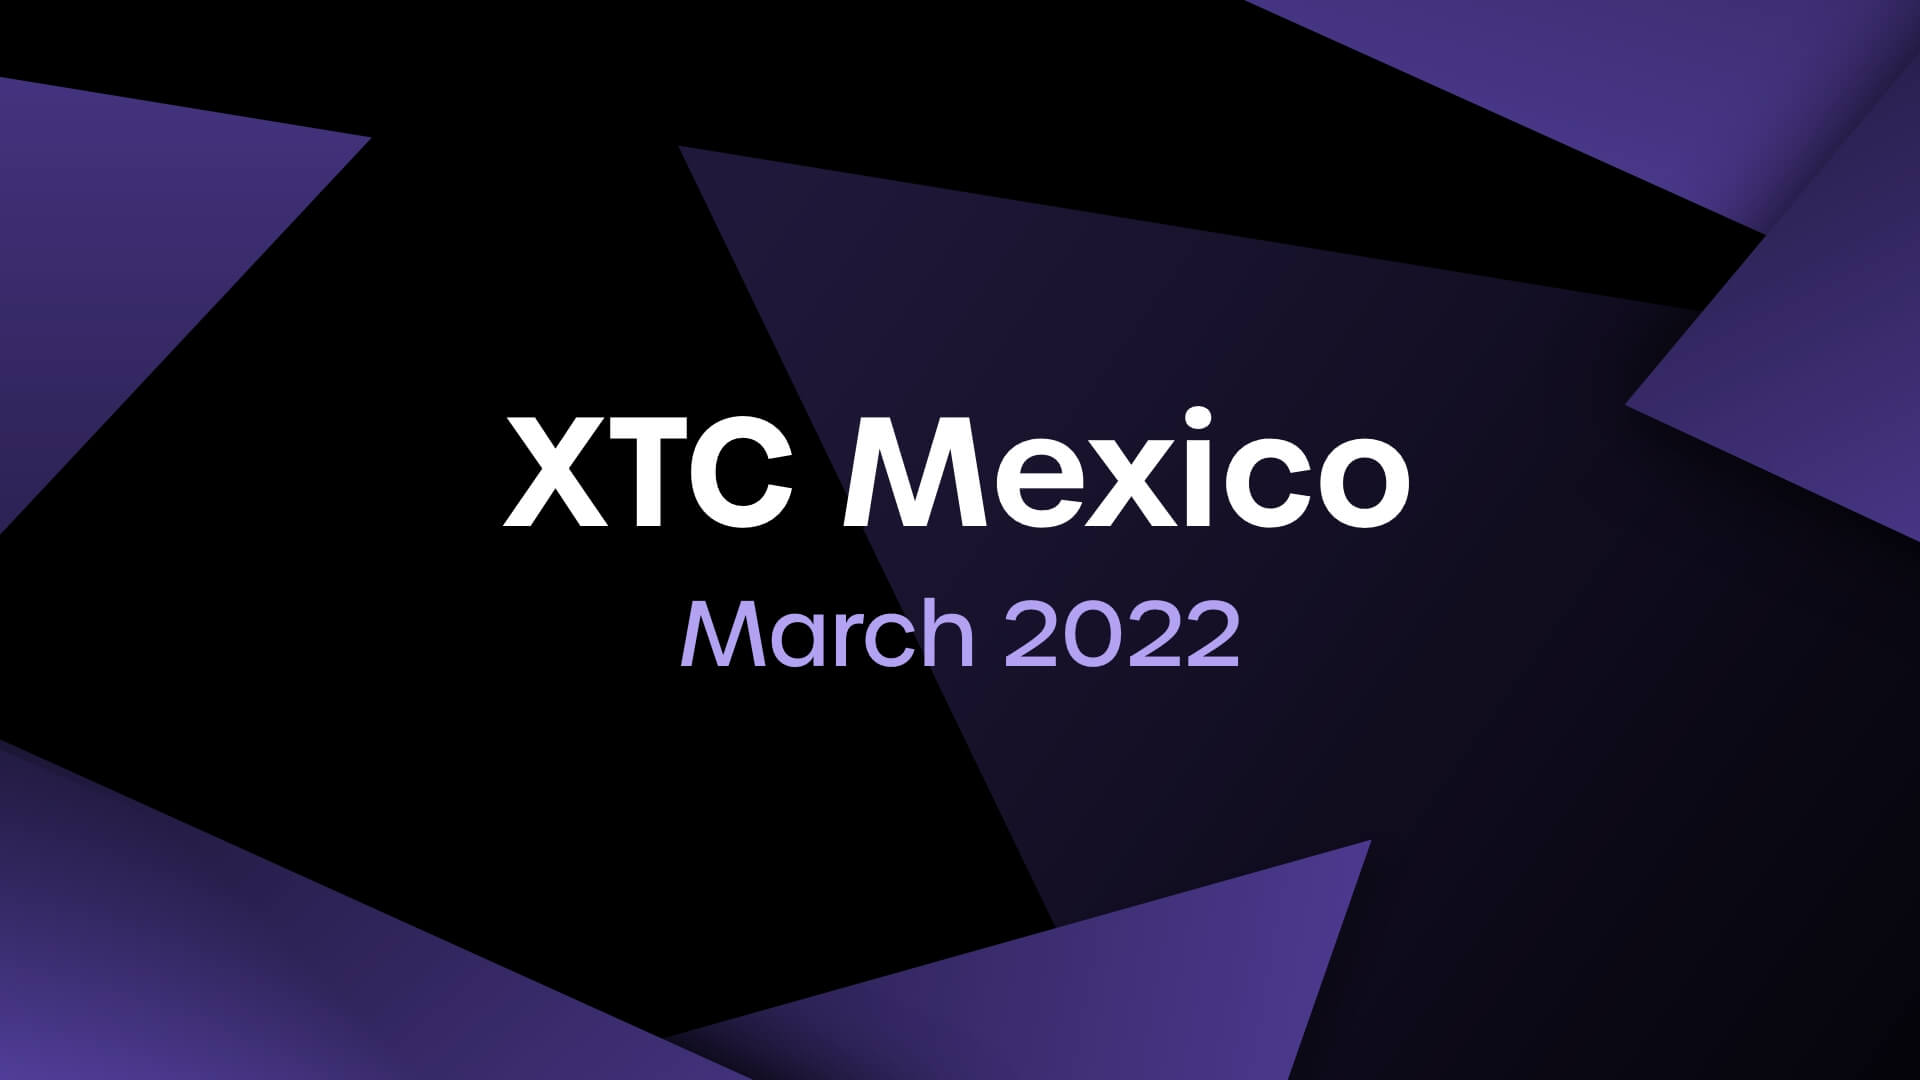 XTC Mexico